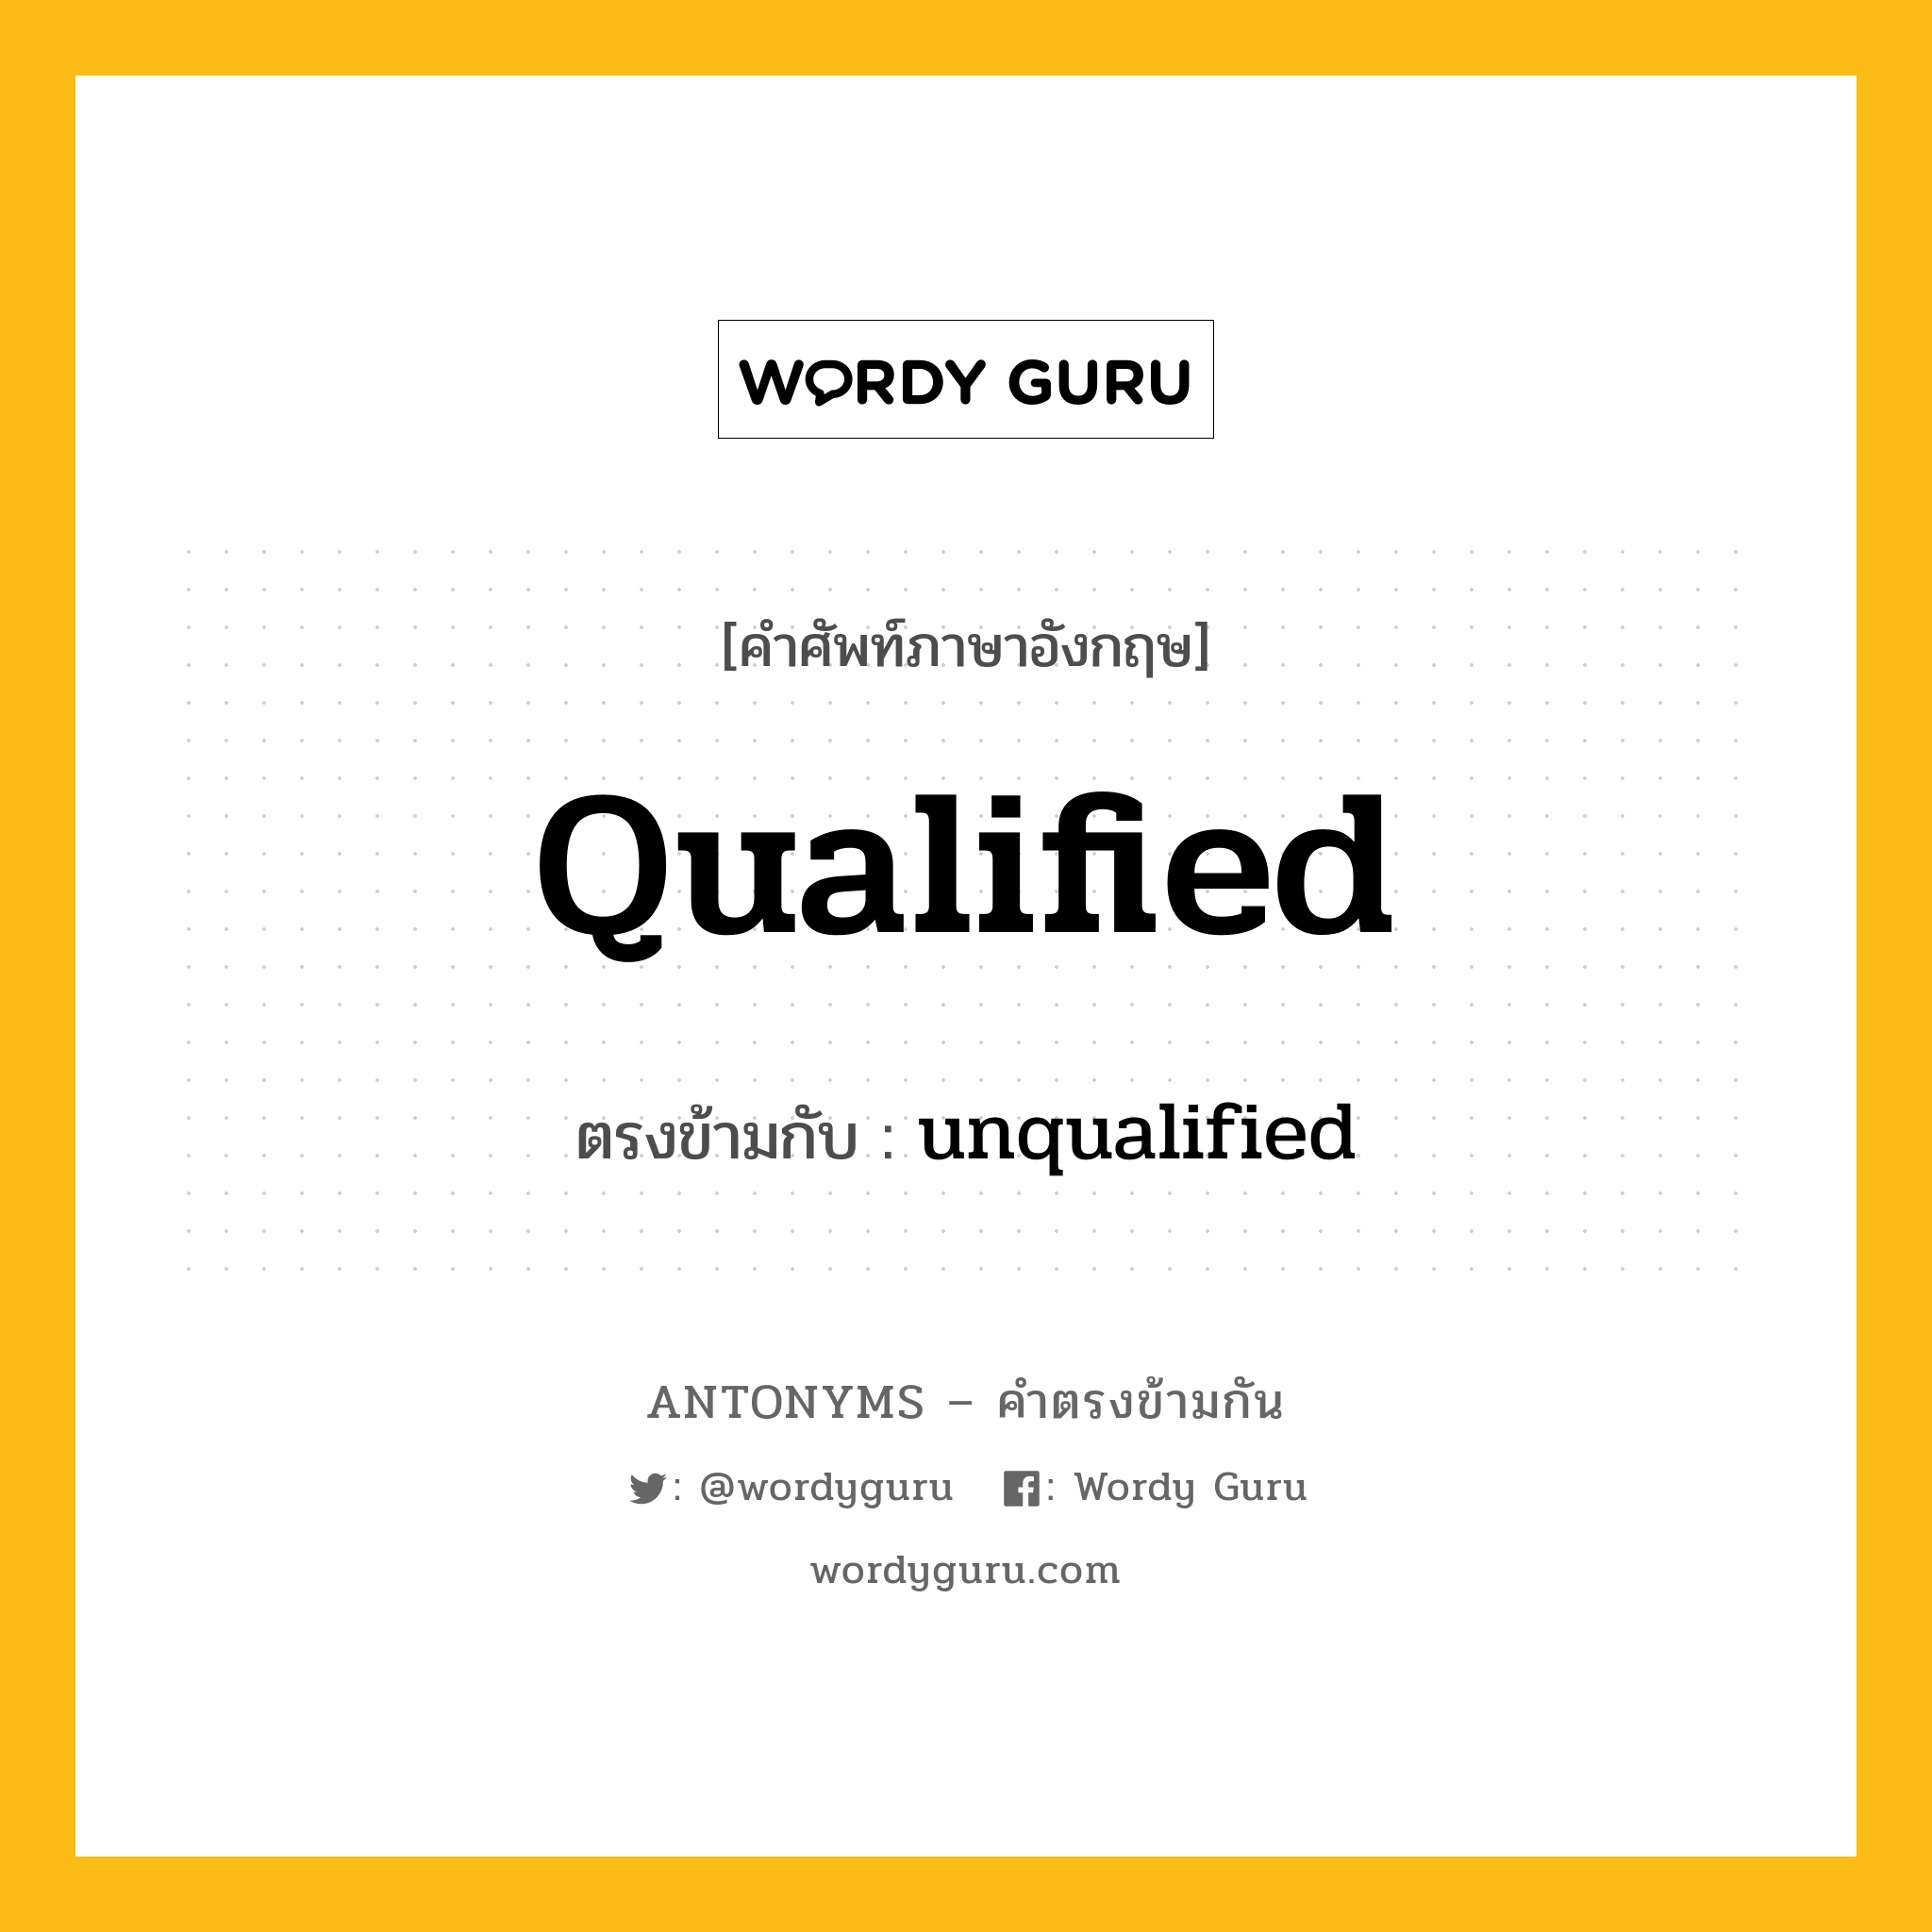 qualified เป็นคำตรงข้ามกับคำไหนบ้าง?, คำศัพท์ภาษาอังกฤษ qualified ตรงข้ามกับ unqualified หมวด unqualified